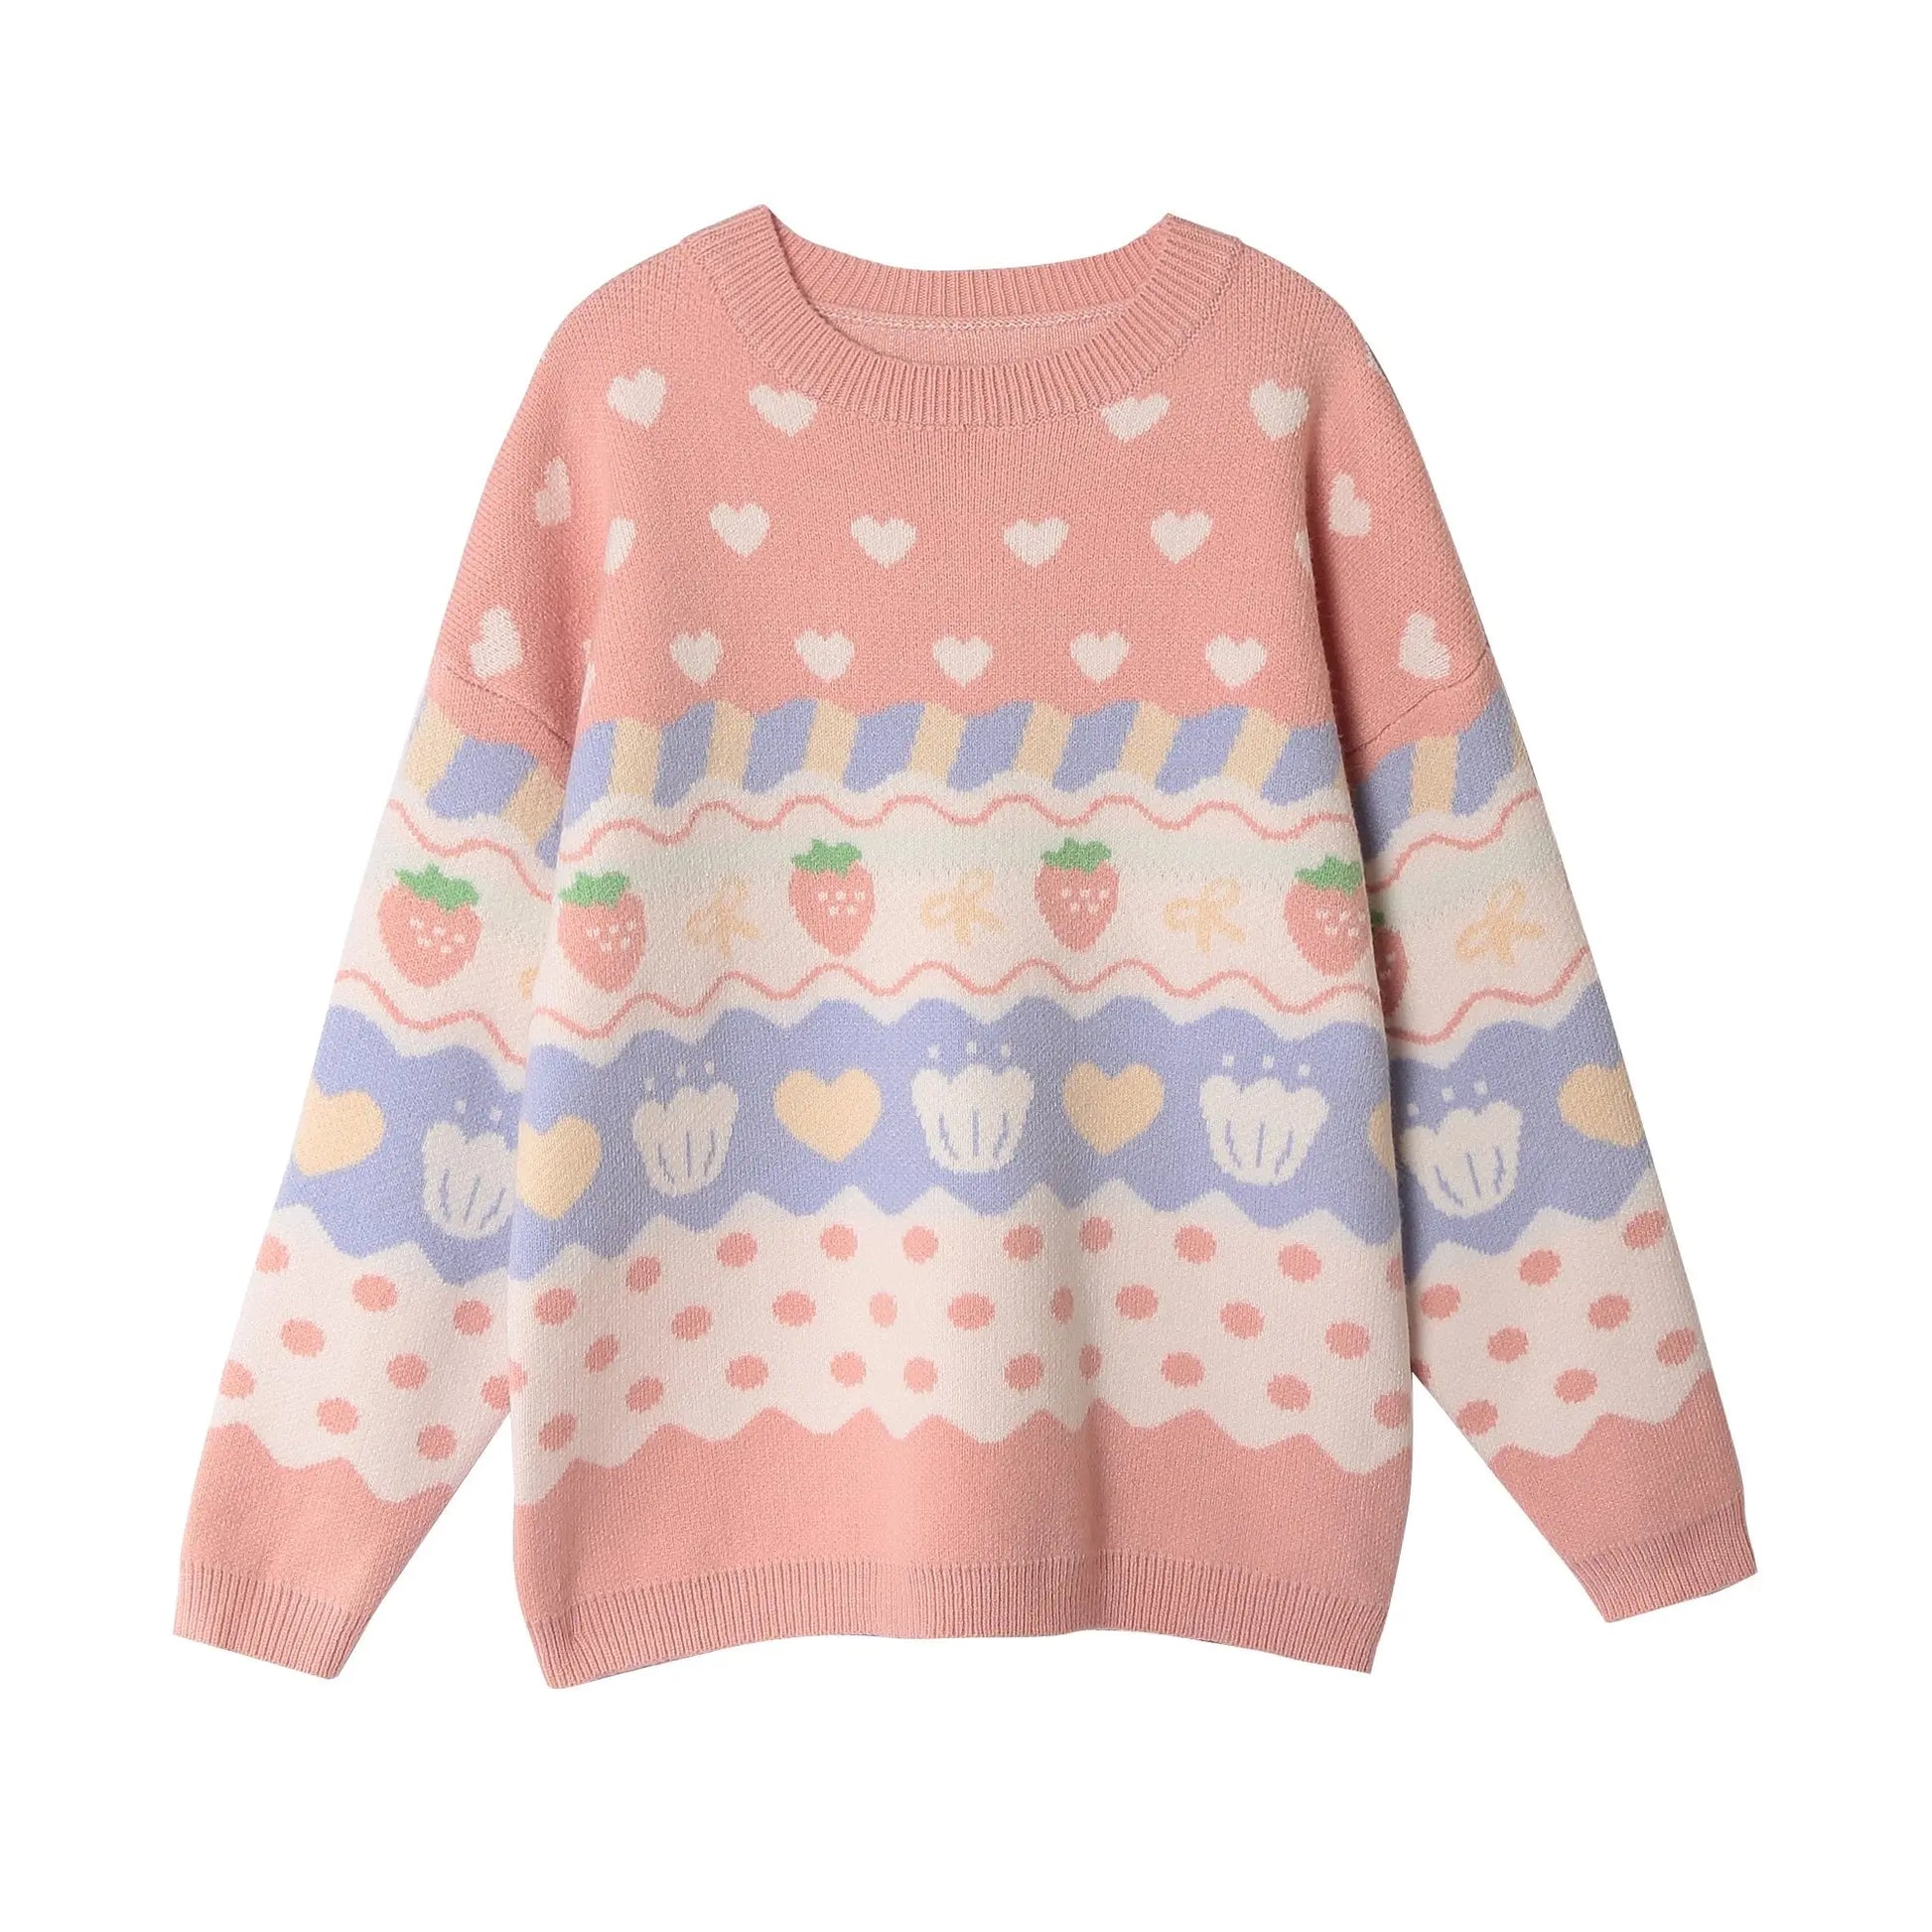 Kawaii Pink Strawberry Harajuku Sweater - Pink / One Size - Sweaters - Shirts & Tops - 5 - 2024